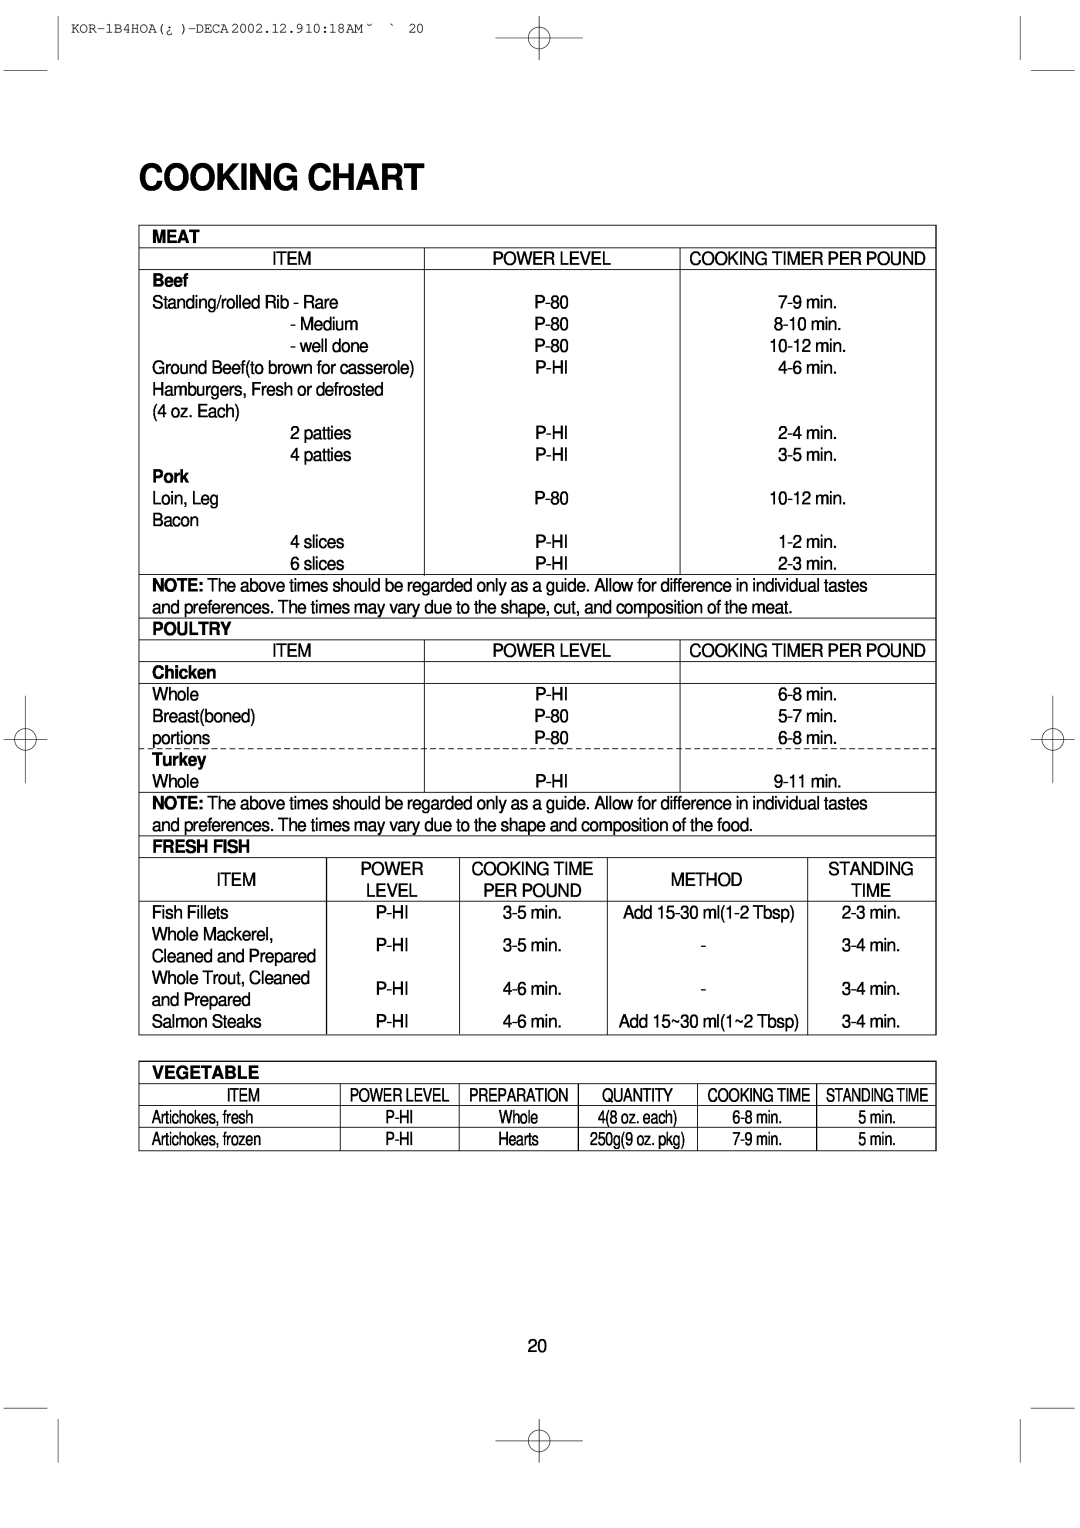 Daewoo KOR-1B4H manual Cooking Chart, Meat, Beef, Pork, Chicken, Turkey, Fresh Fish, Vegetable, Poultry 